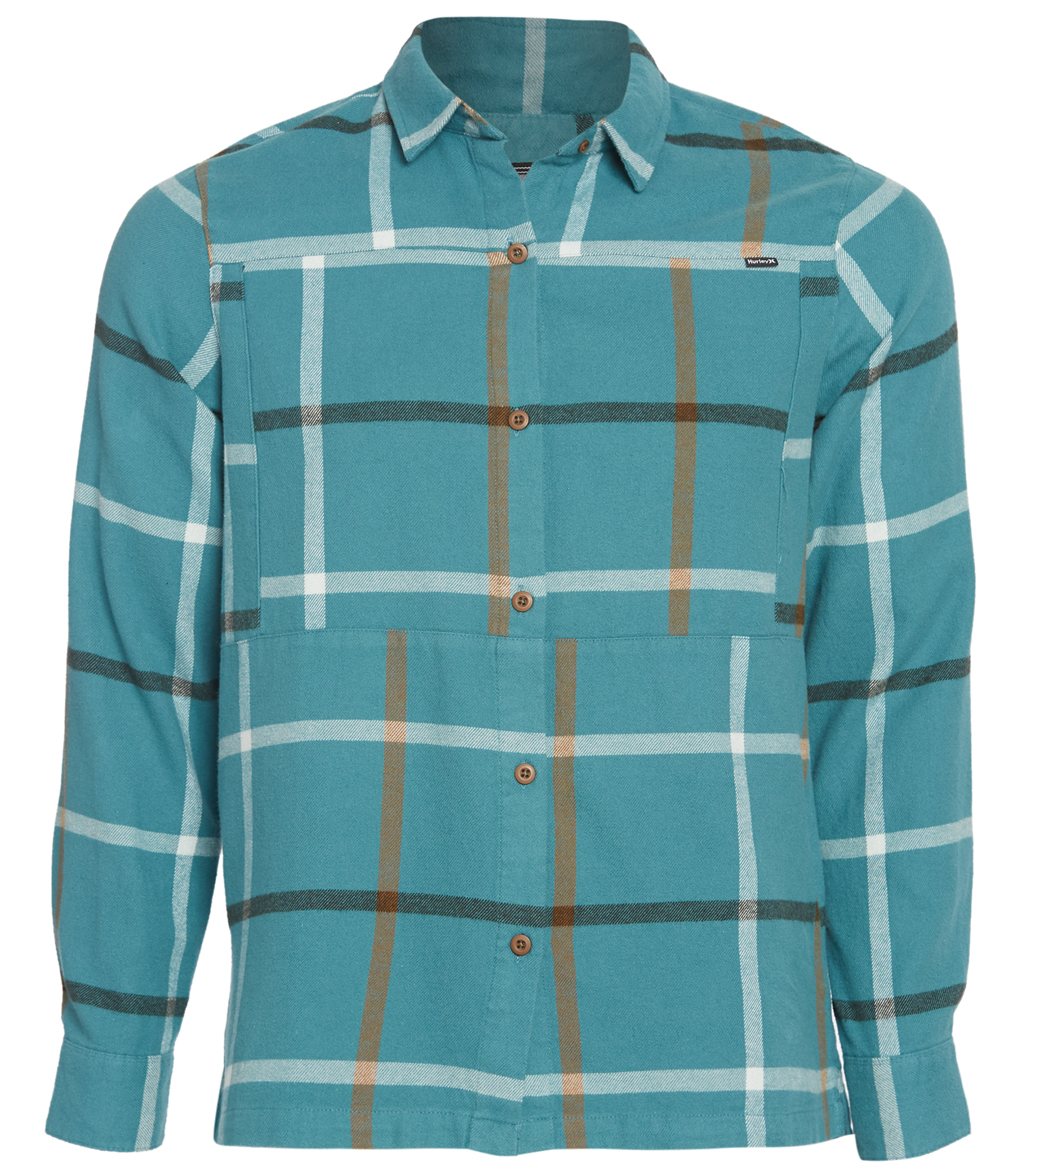 Hurley Wilson Flannel Long Sleeve Shirt - Mineral Teal Medium Cotton - Swimoutlet.com